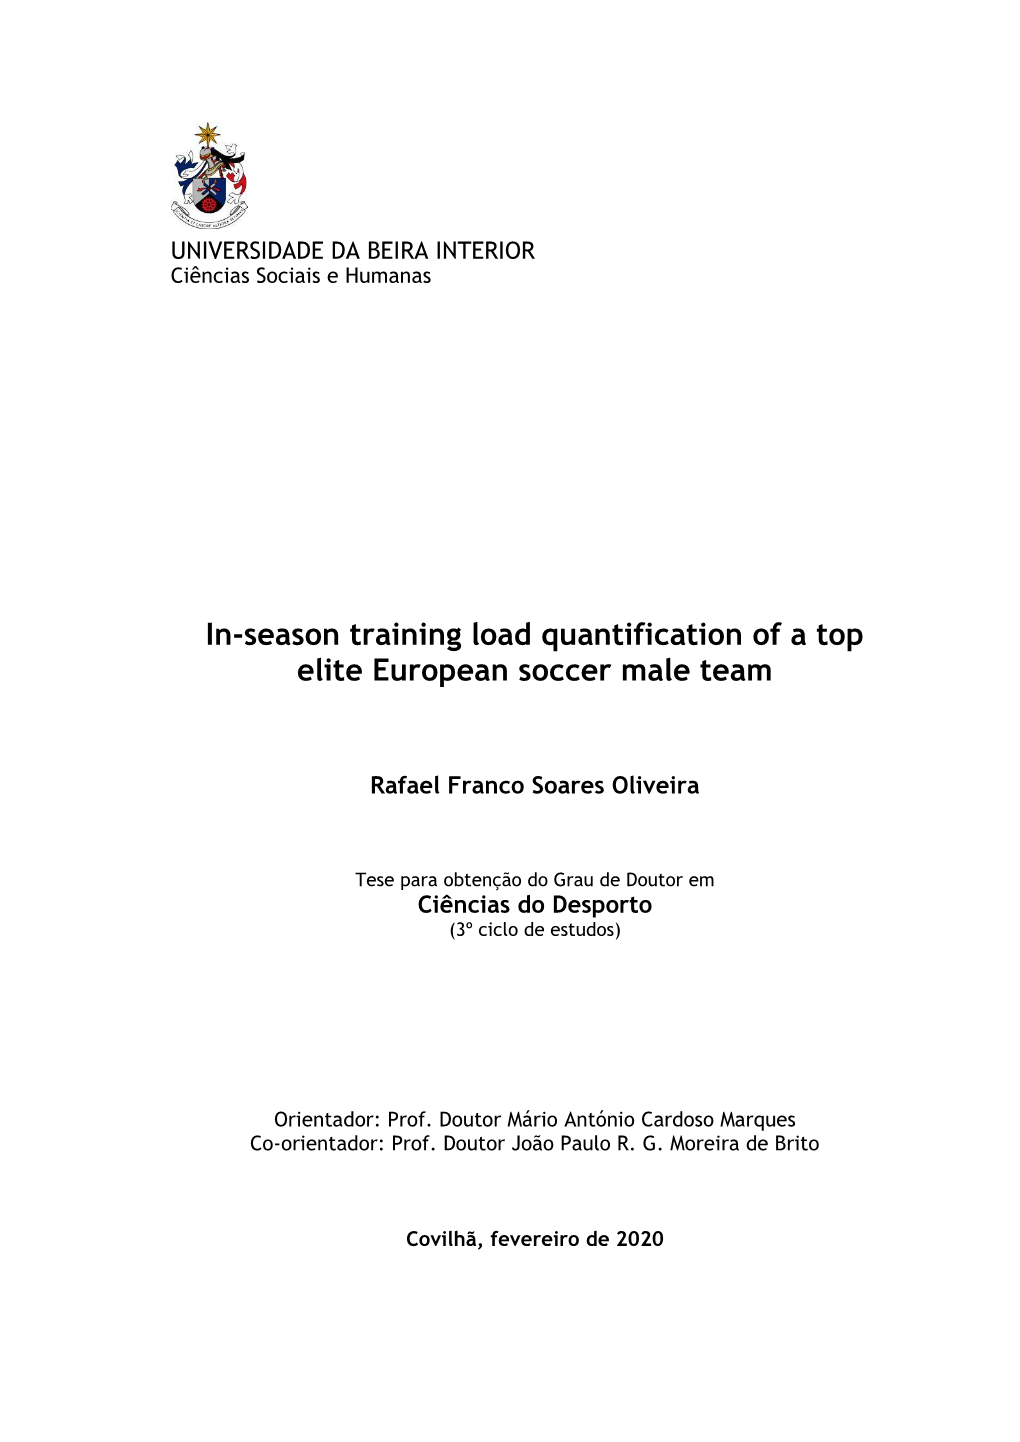 In-Season Training Load Quantification of a Top Elite European Soccer Male Team